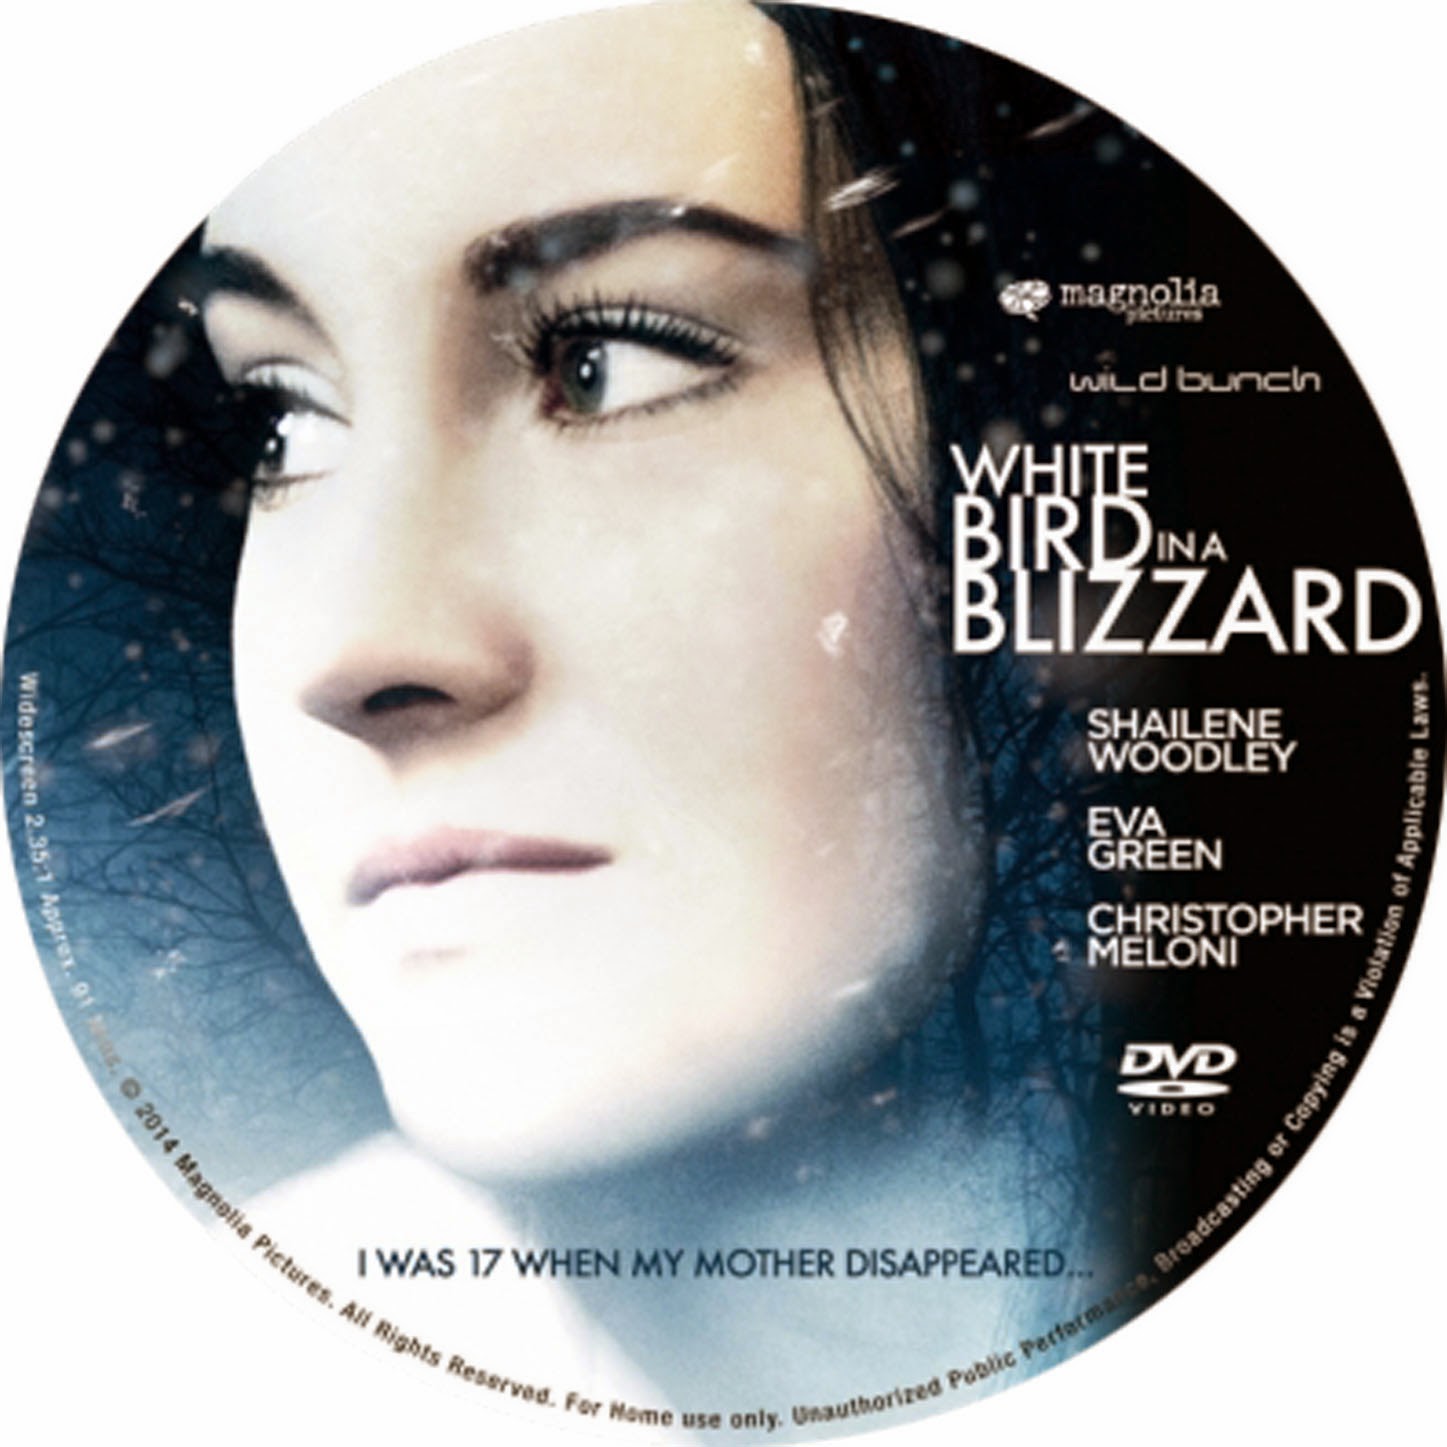 White Bird in a Blizzard (2014) - CD Label Cover Movie